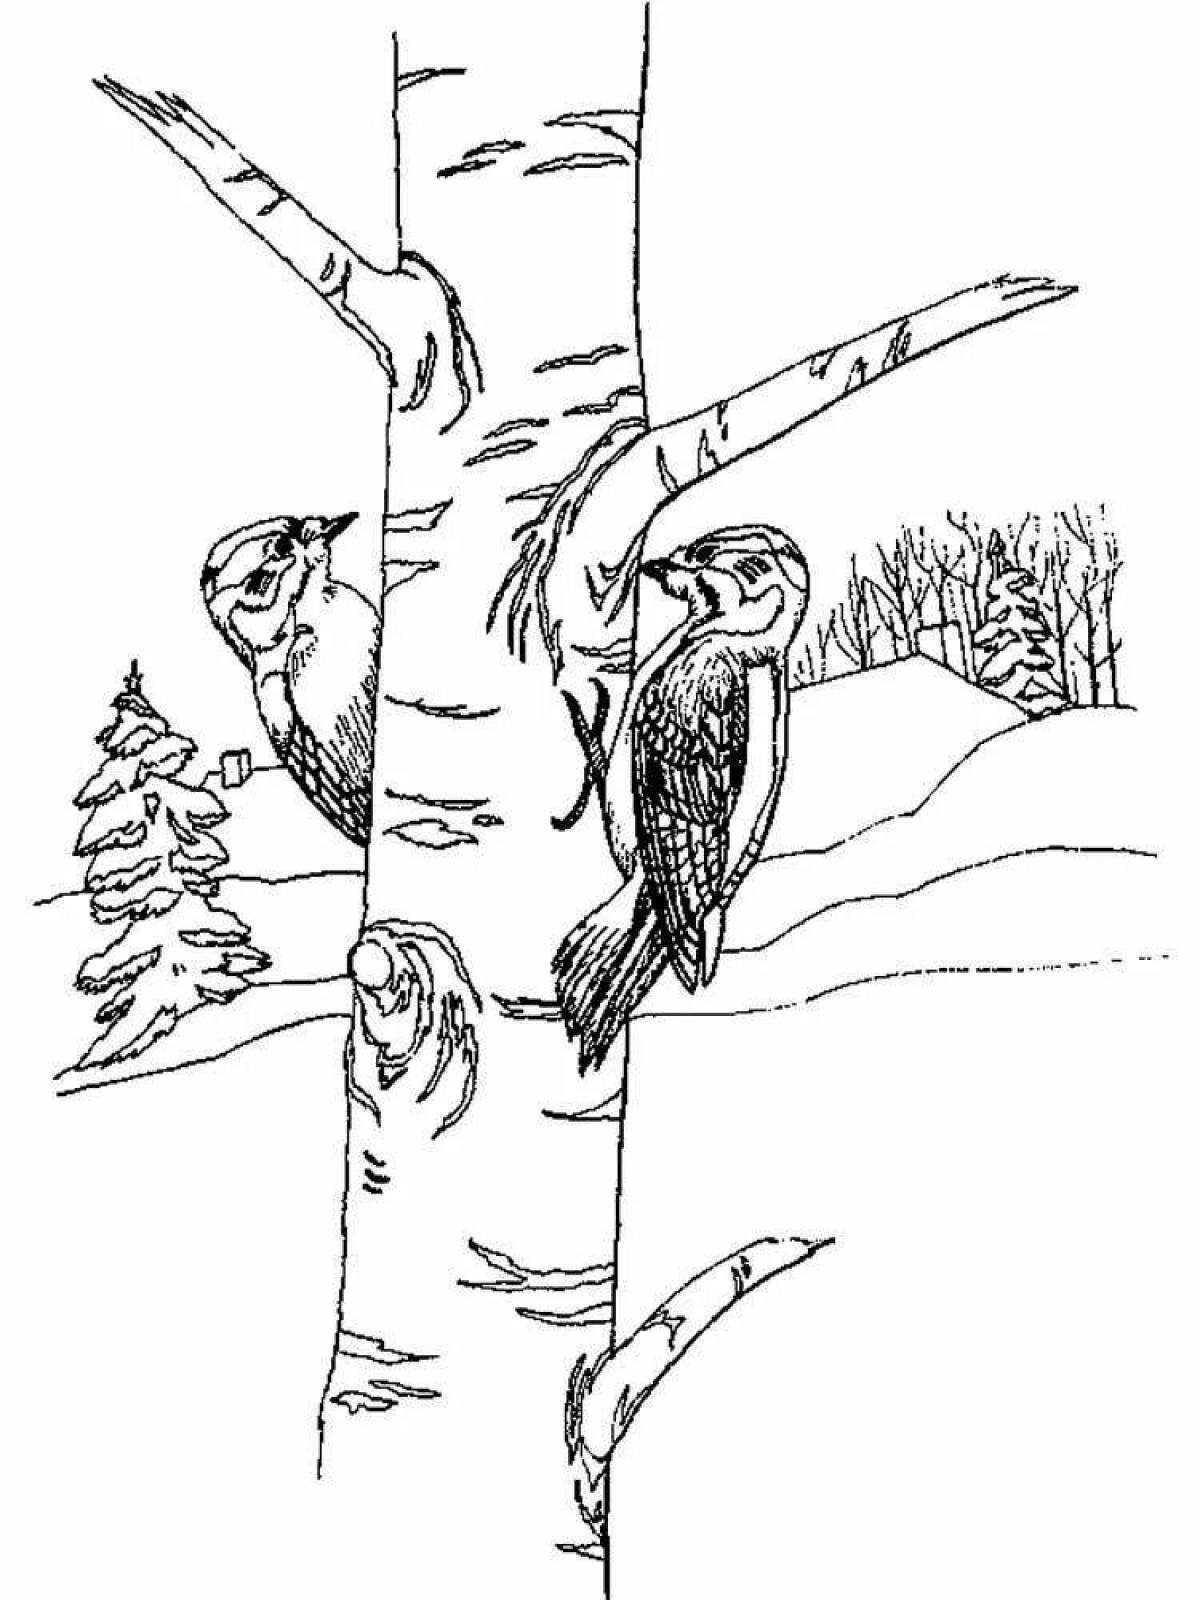 Charm woodpecker on the tree